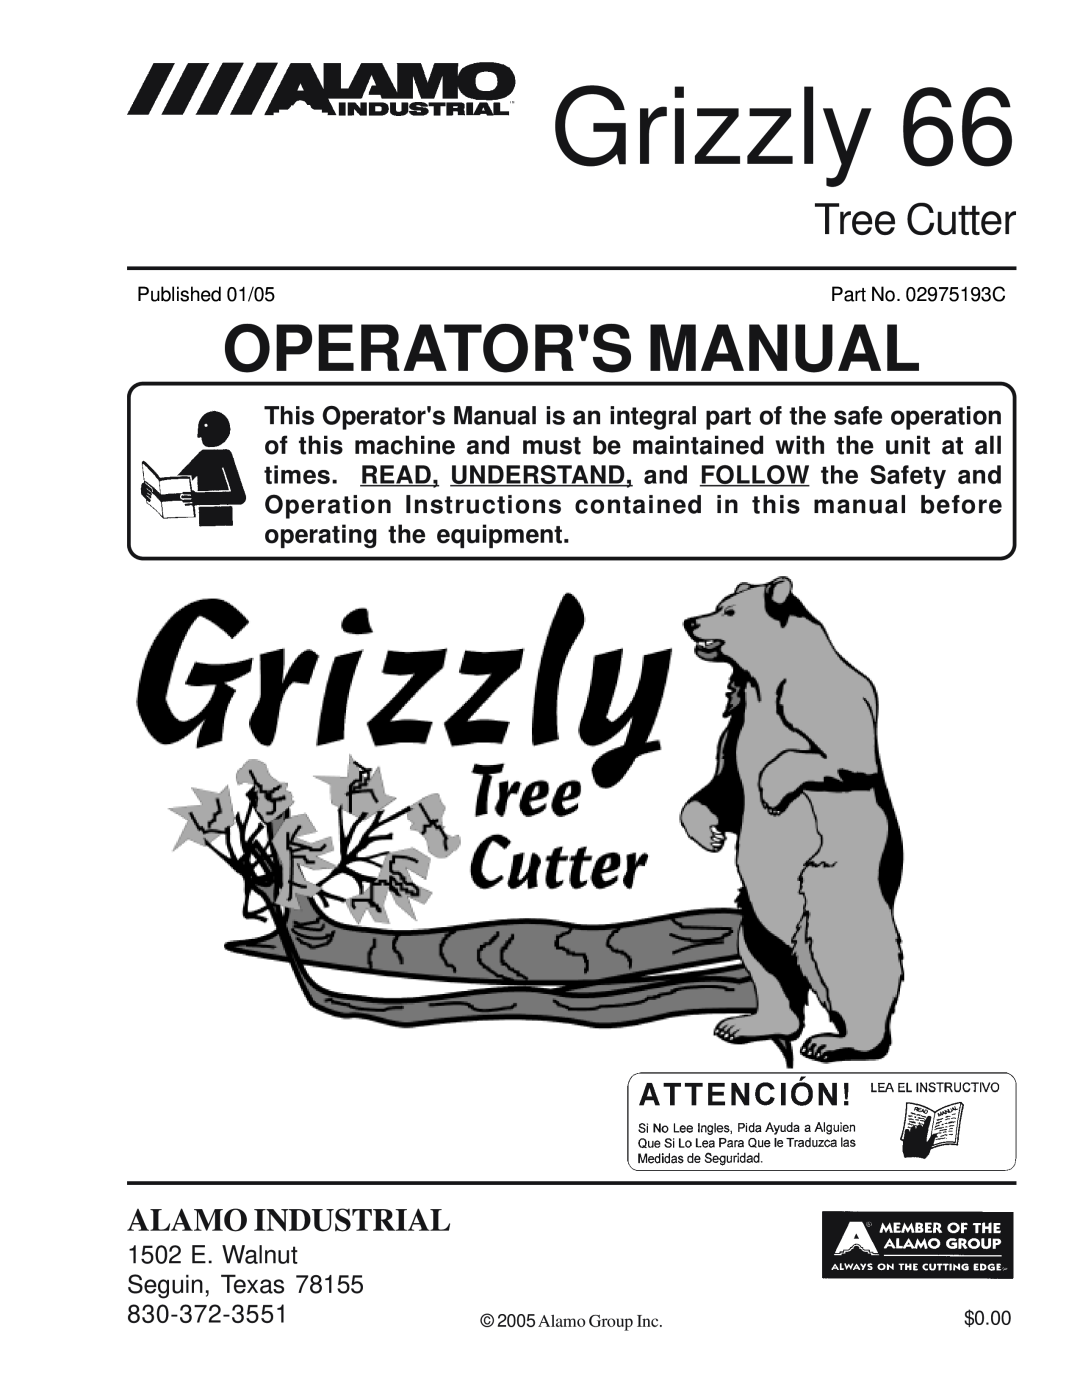 Alamo 66 manual Grizzly, Operators Manual, Tree Cutter, Alamo Industrial, 1502 E. Walnut Seguin, Texas, Alamo Group Inc 